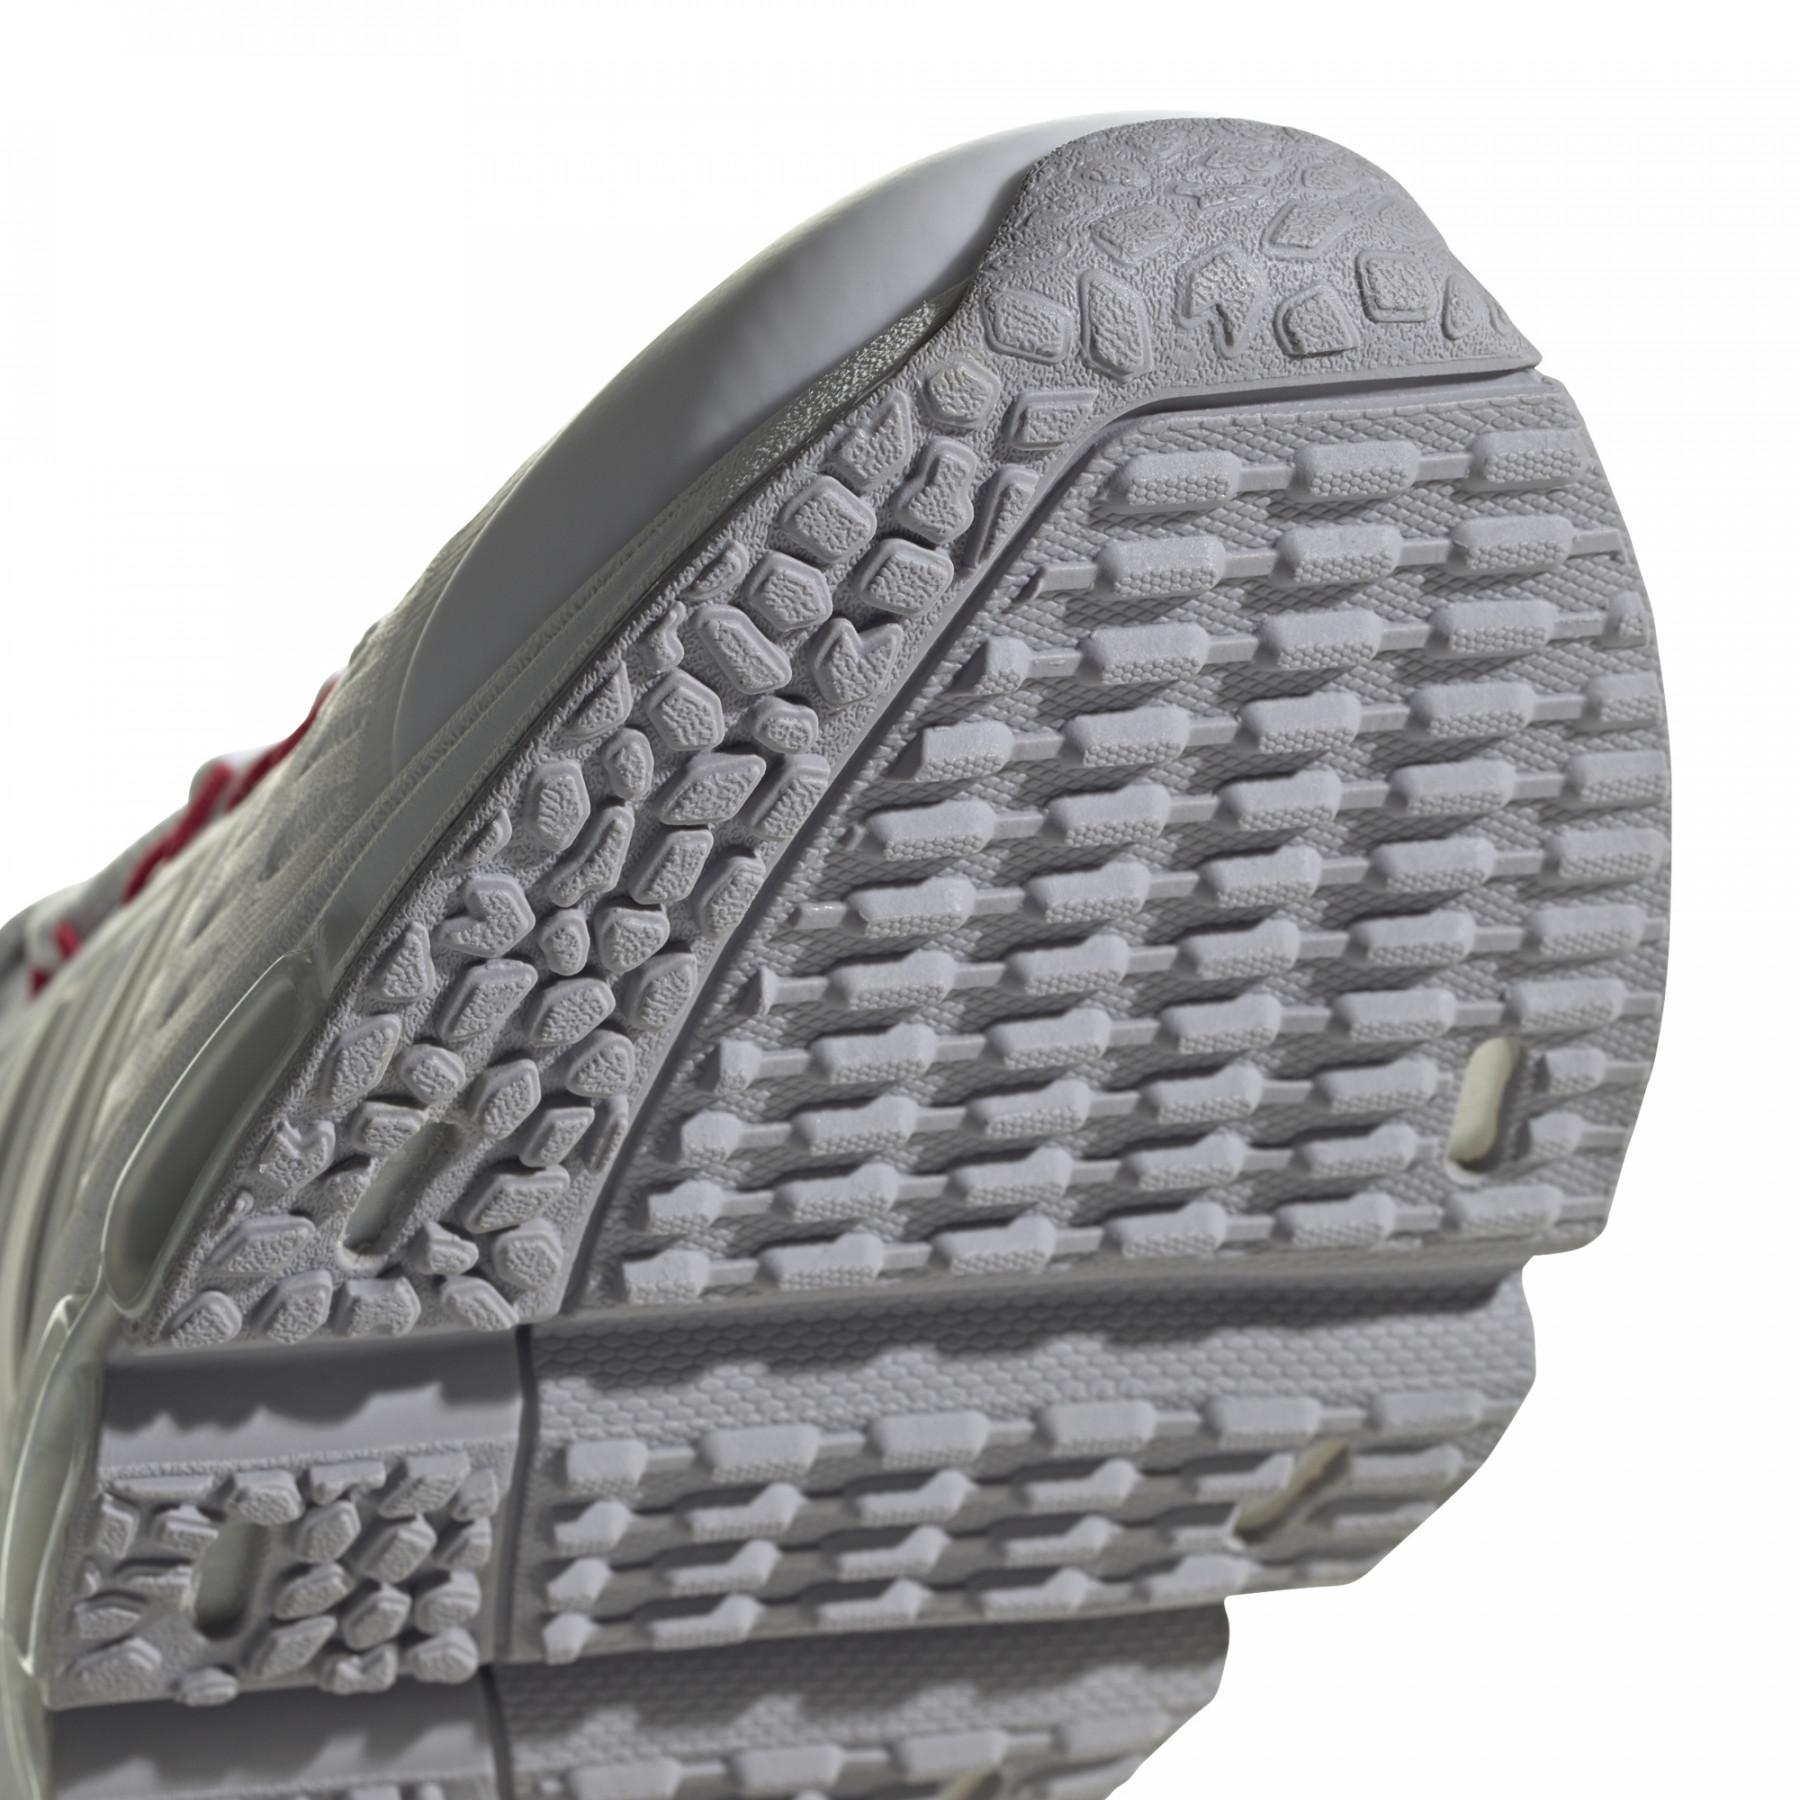 Chaussures de running adidas Tencube